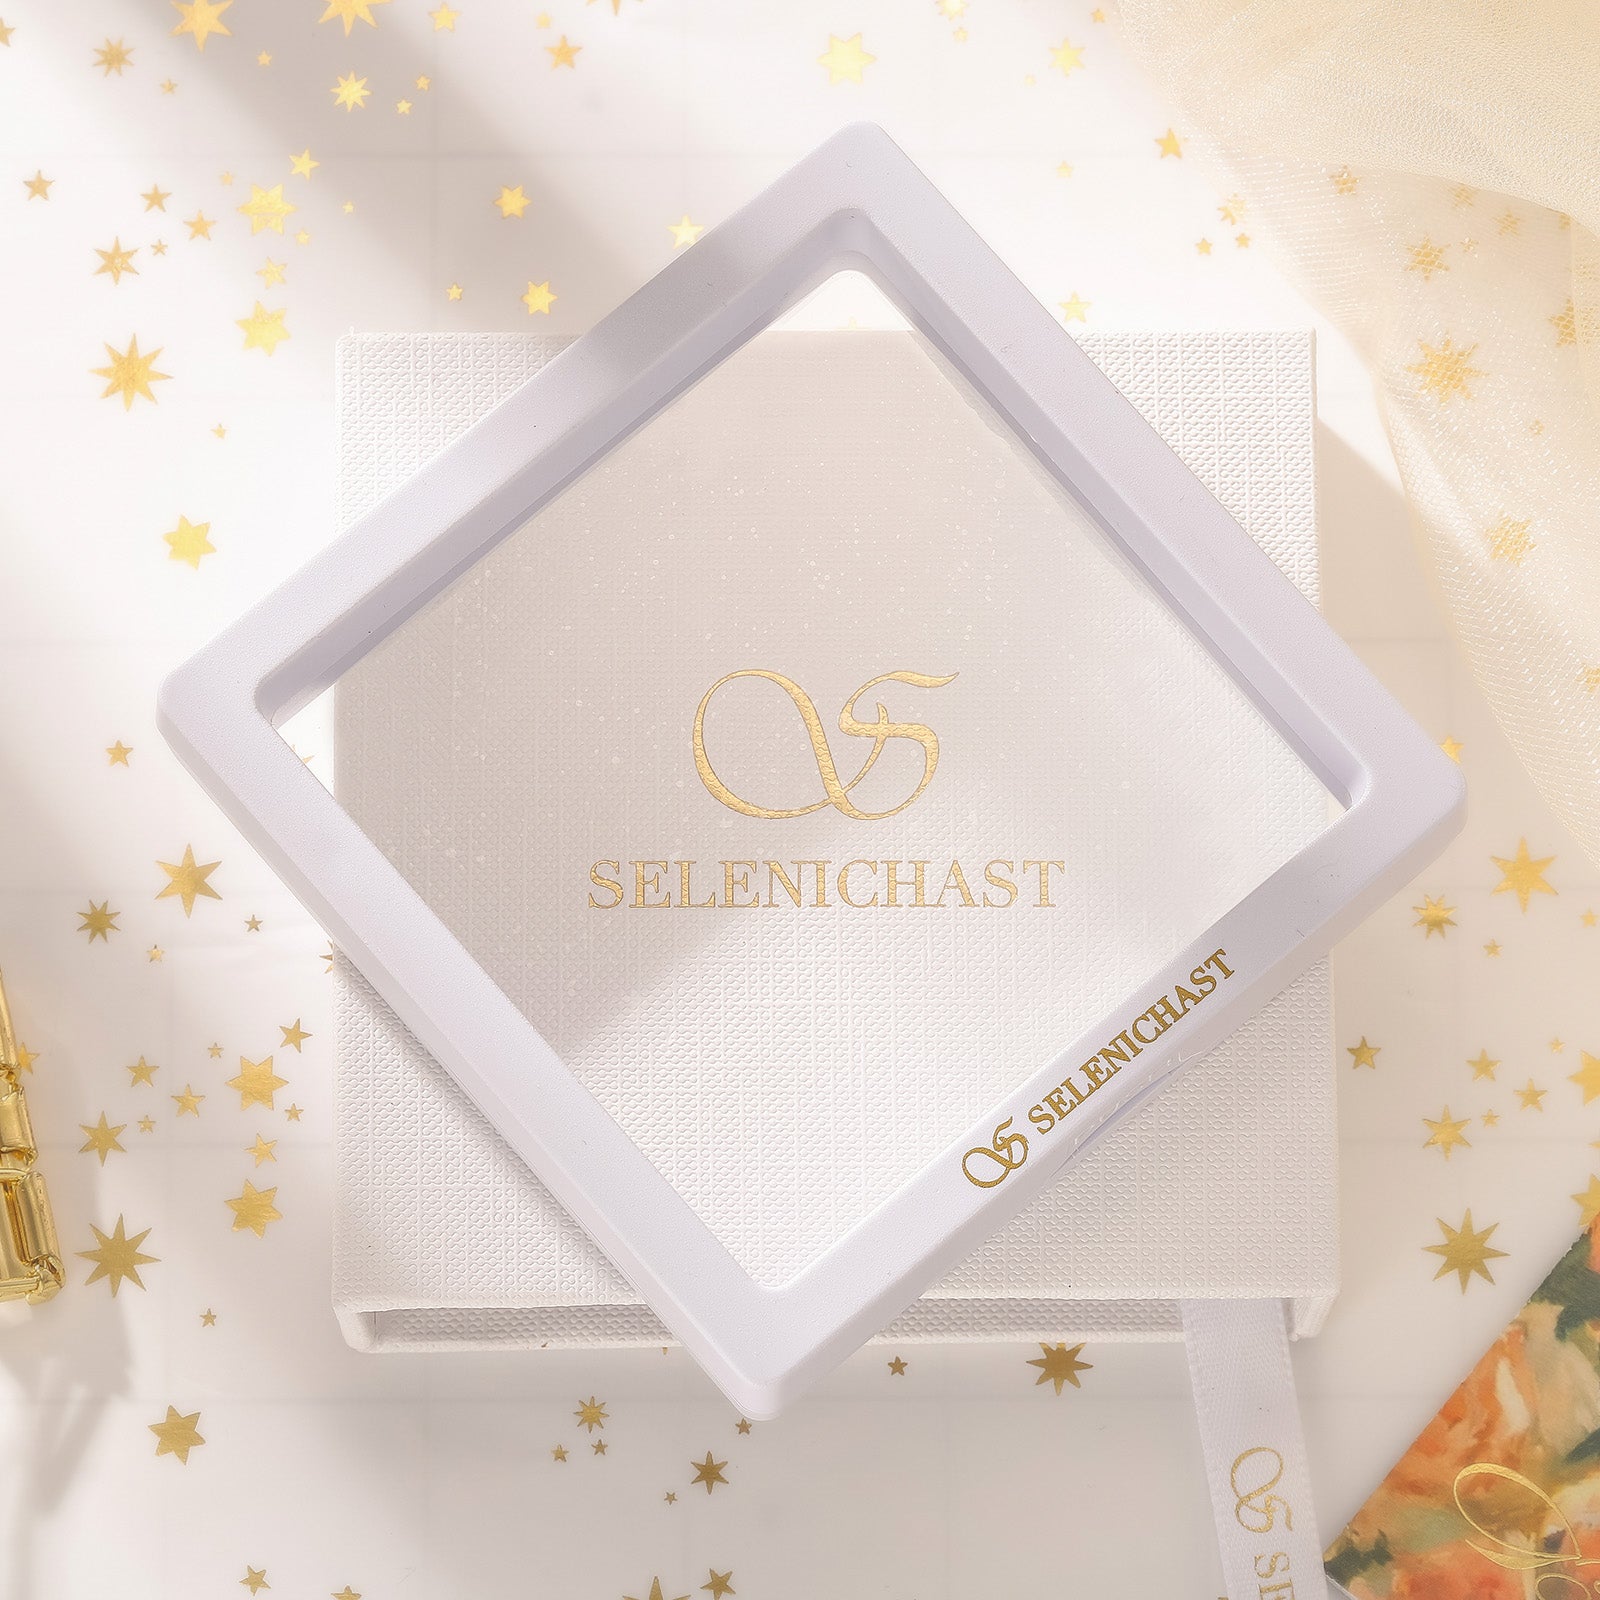 Selenichast Jewelry Gift Box Five Pack